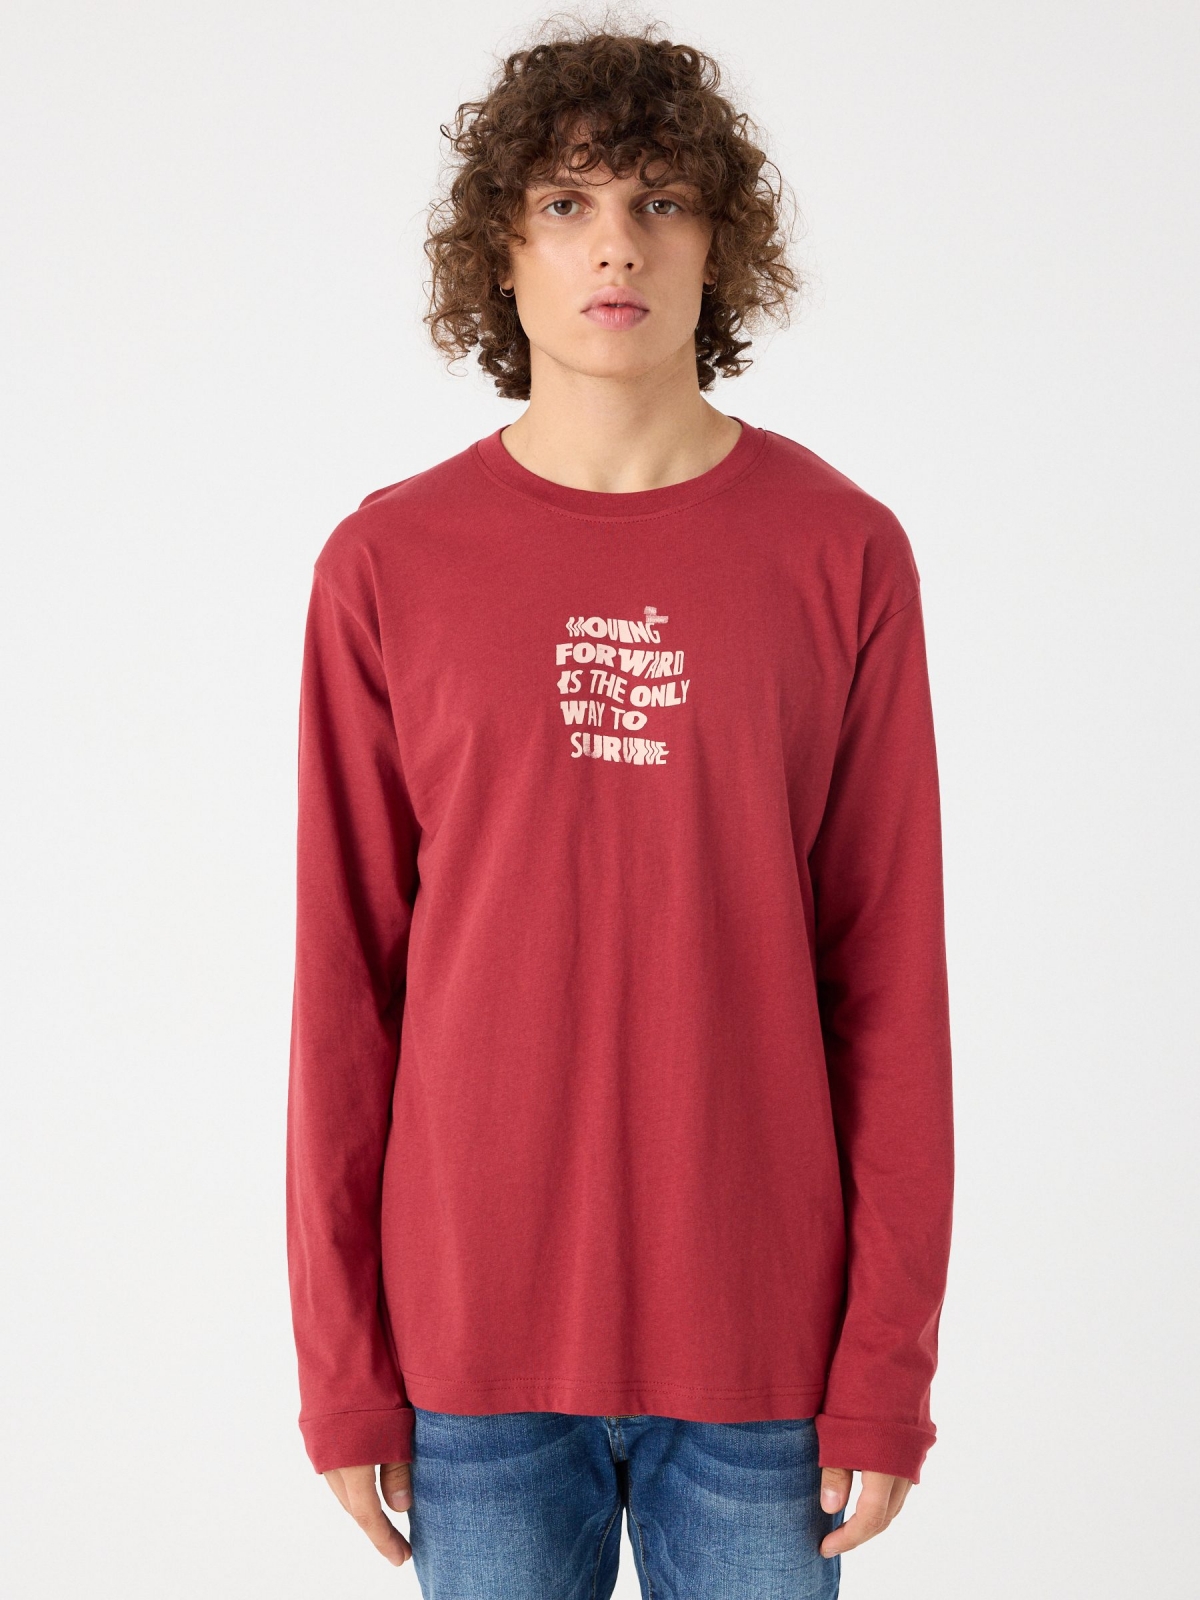 Camiseta estampado doble texto rojo vista media frontal